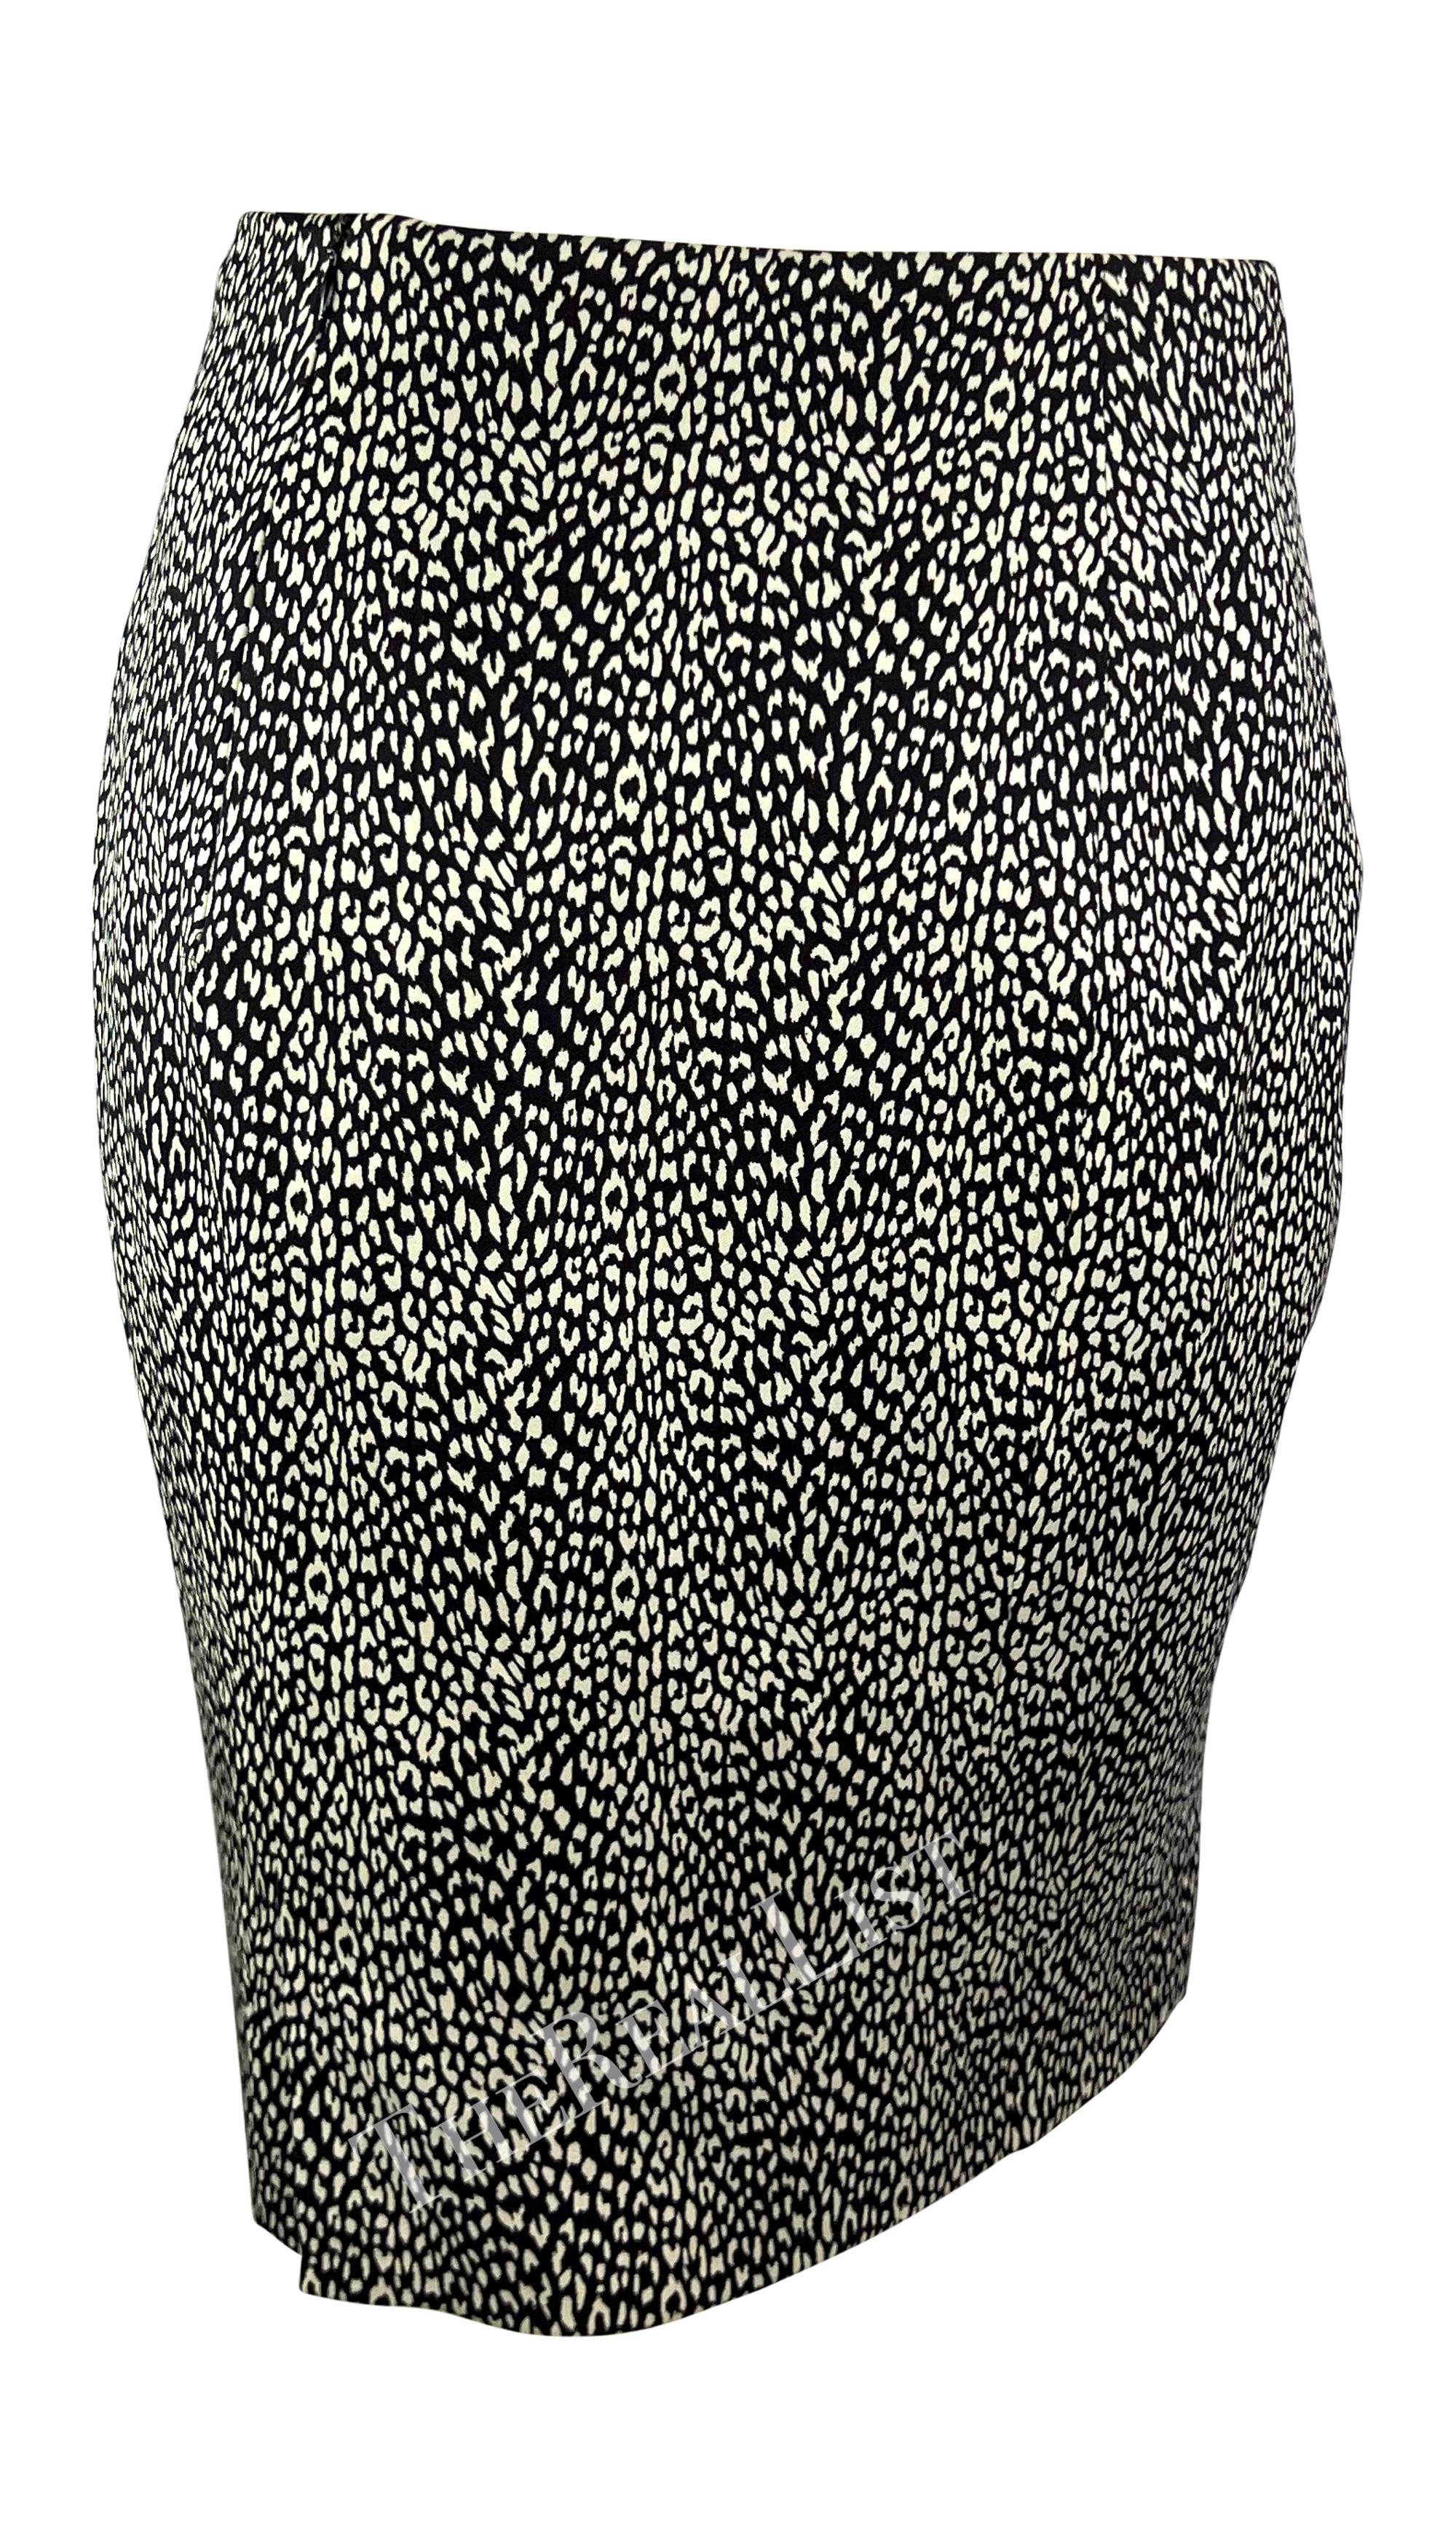 Women's F/W 1996 Gianni Versace Couture Black White Cheetah Print Pencil Skirt  For Sale